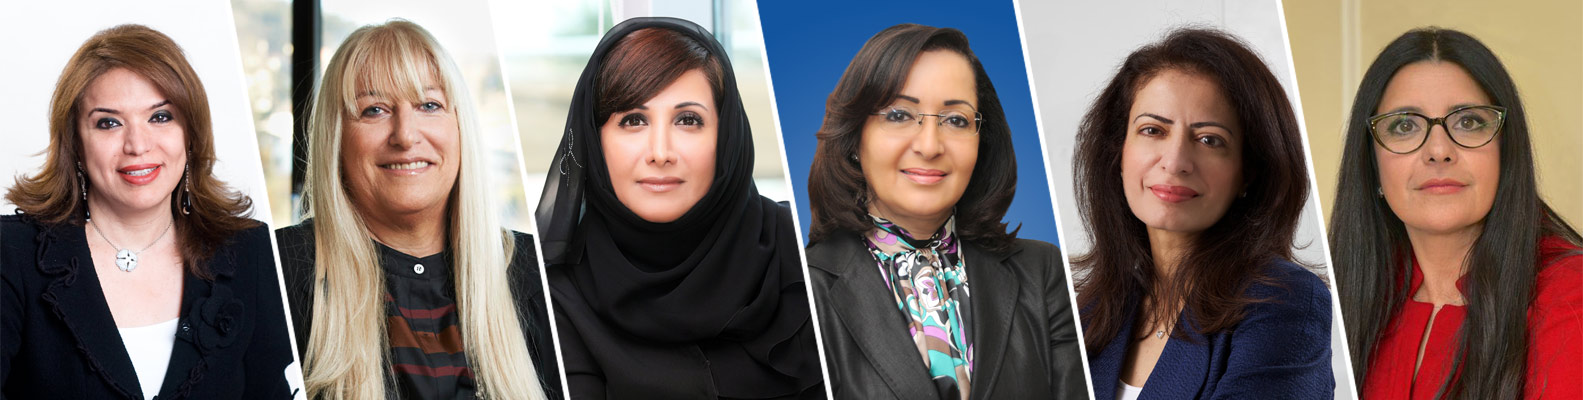 200 Most Powerful Arab Women - 2014: Executive Management